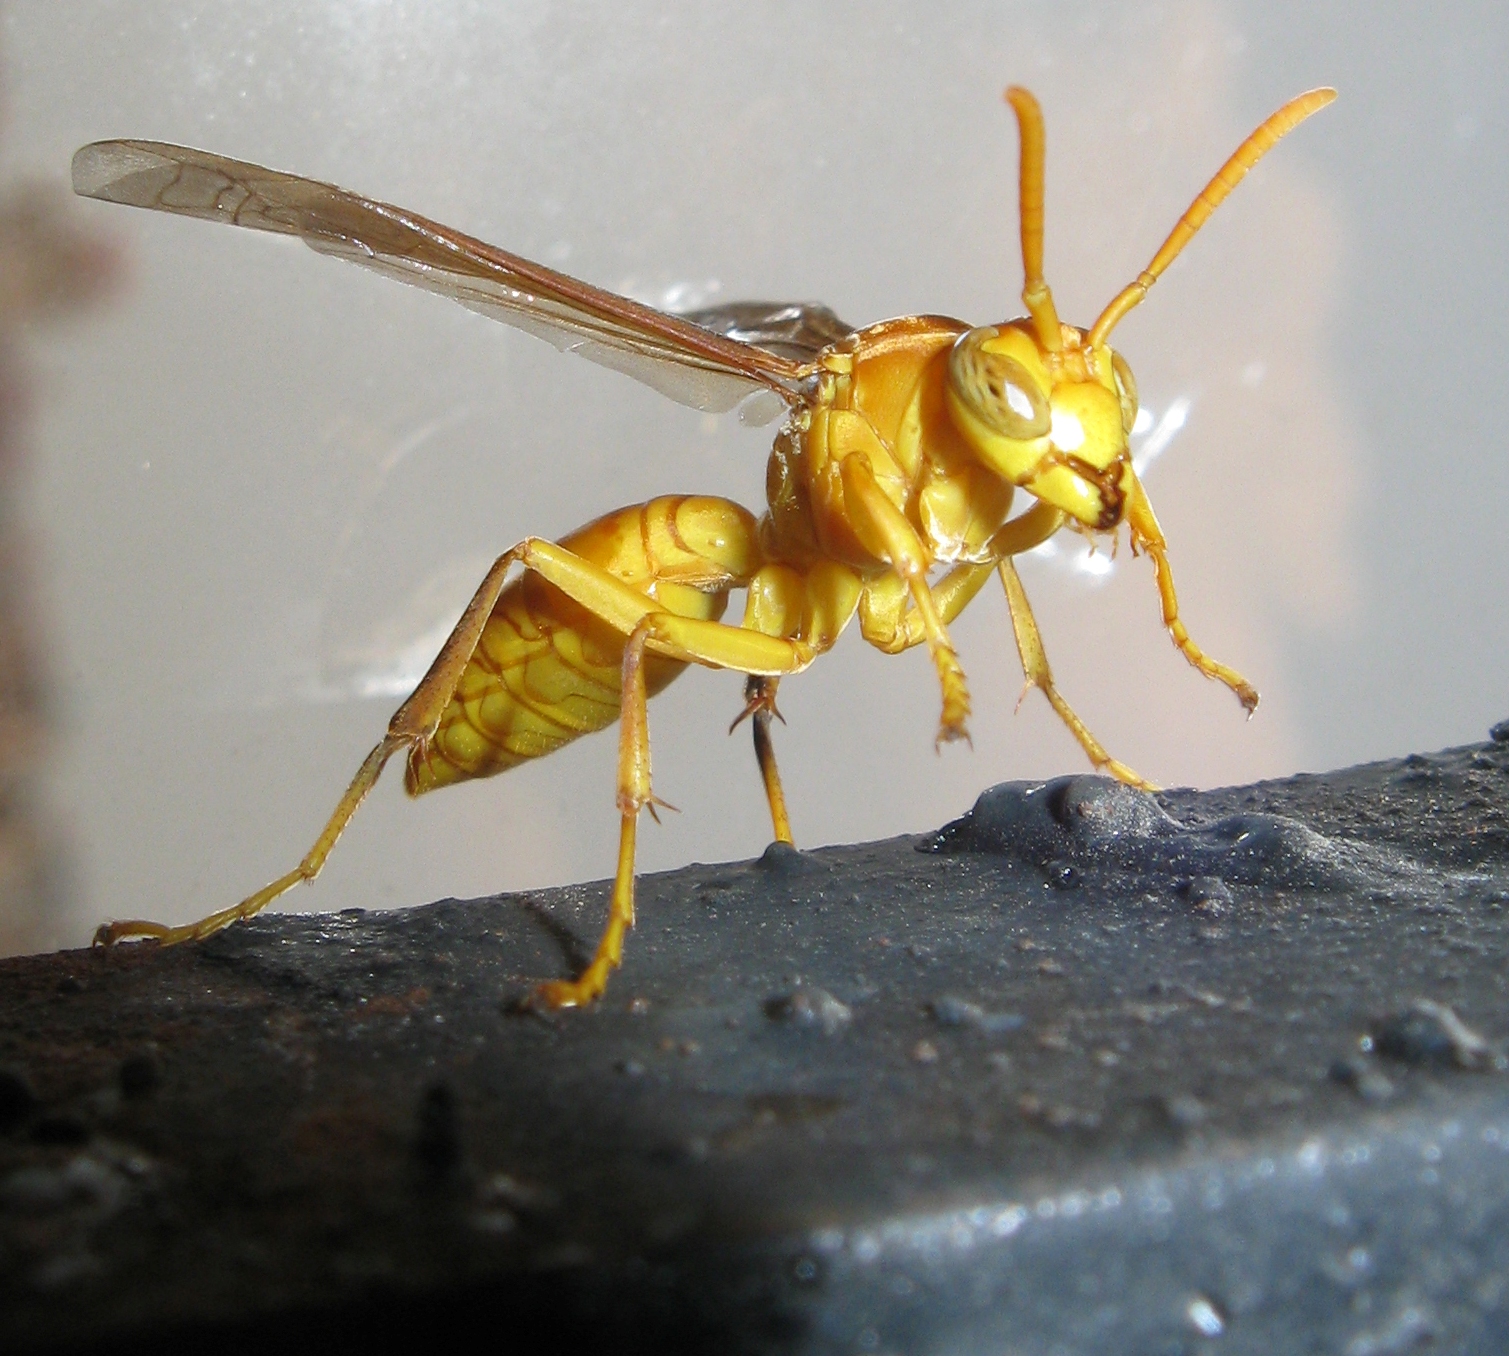 File:Wasp Punjab-India.JPG - Wikimedia Commons